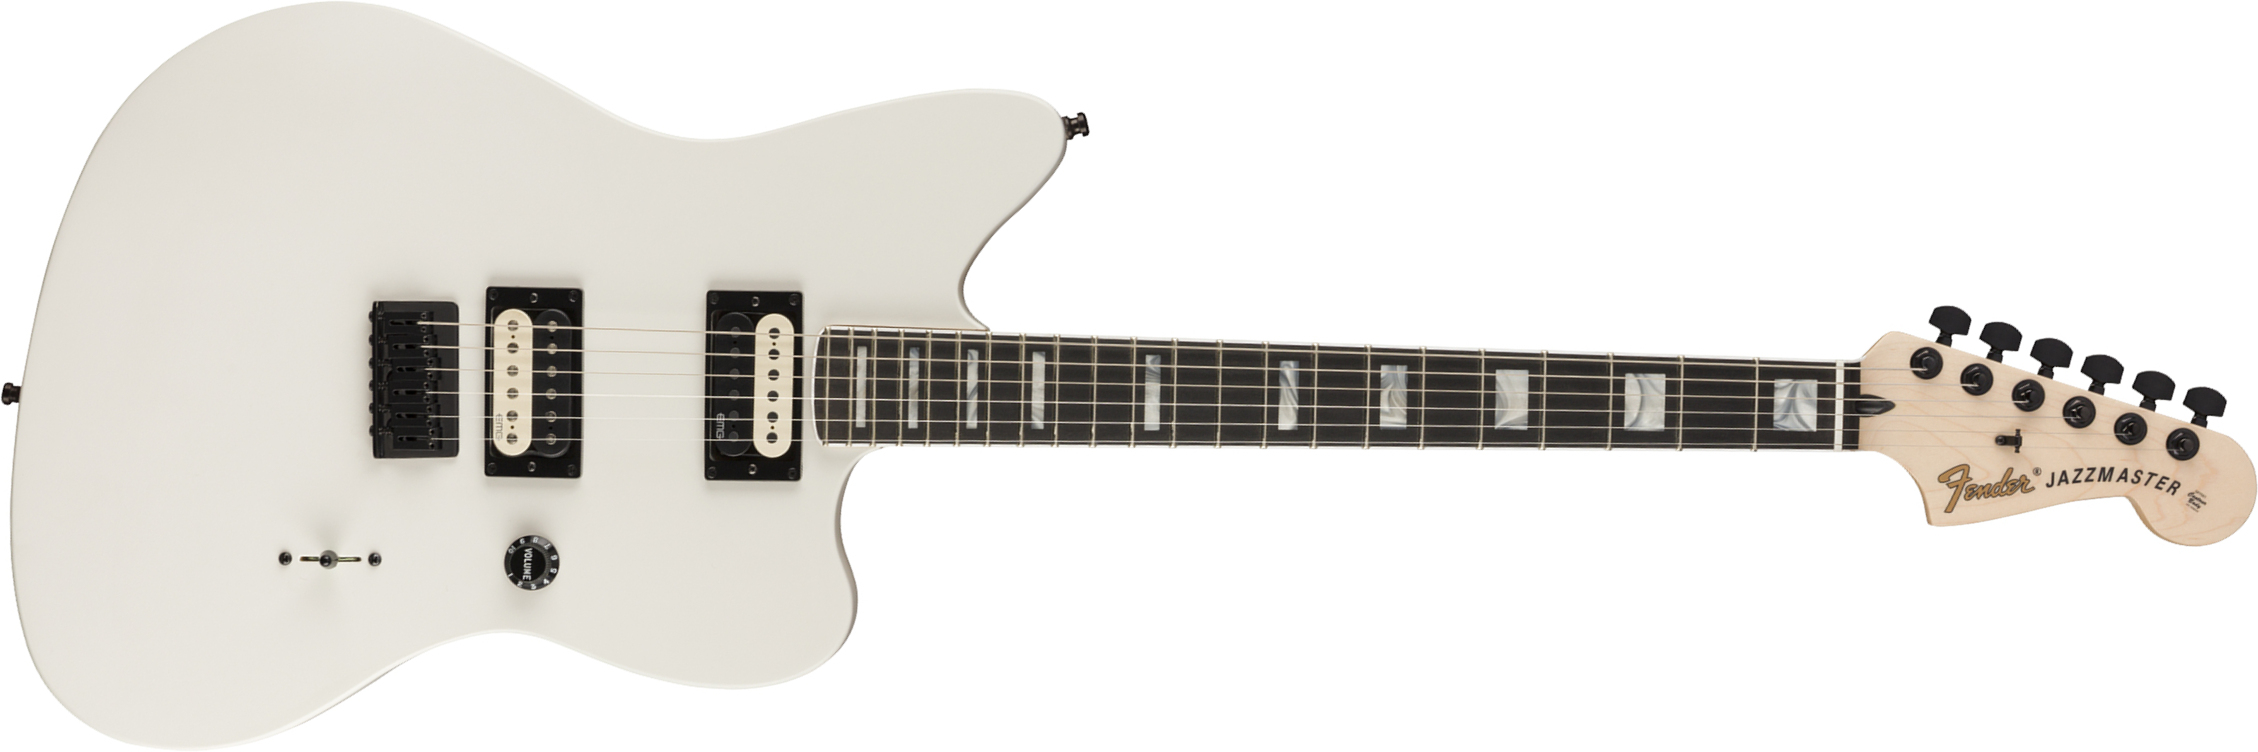 Fender Jim Root Jazzmaster V4 Mex Signature Hh Emg Ht Eb - Artic White - Retro rock electric guitar - Main picture